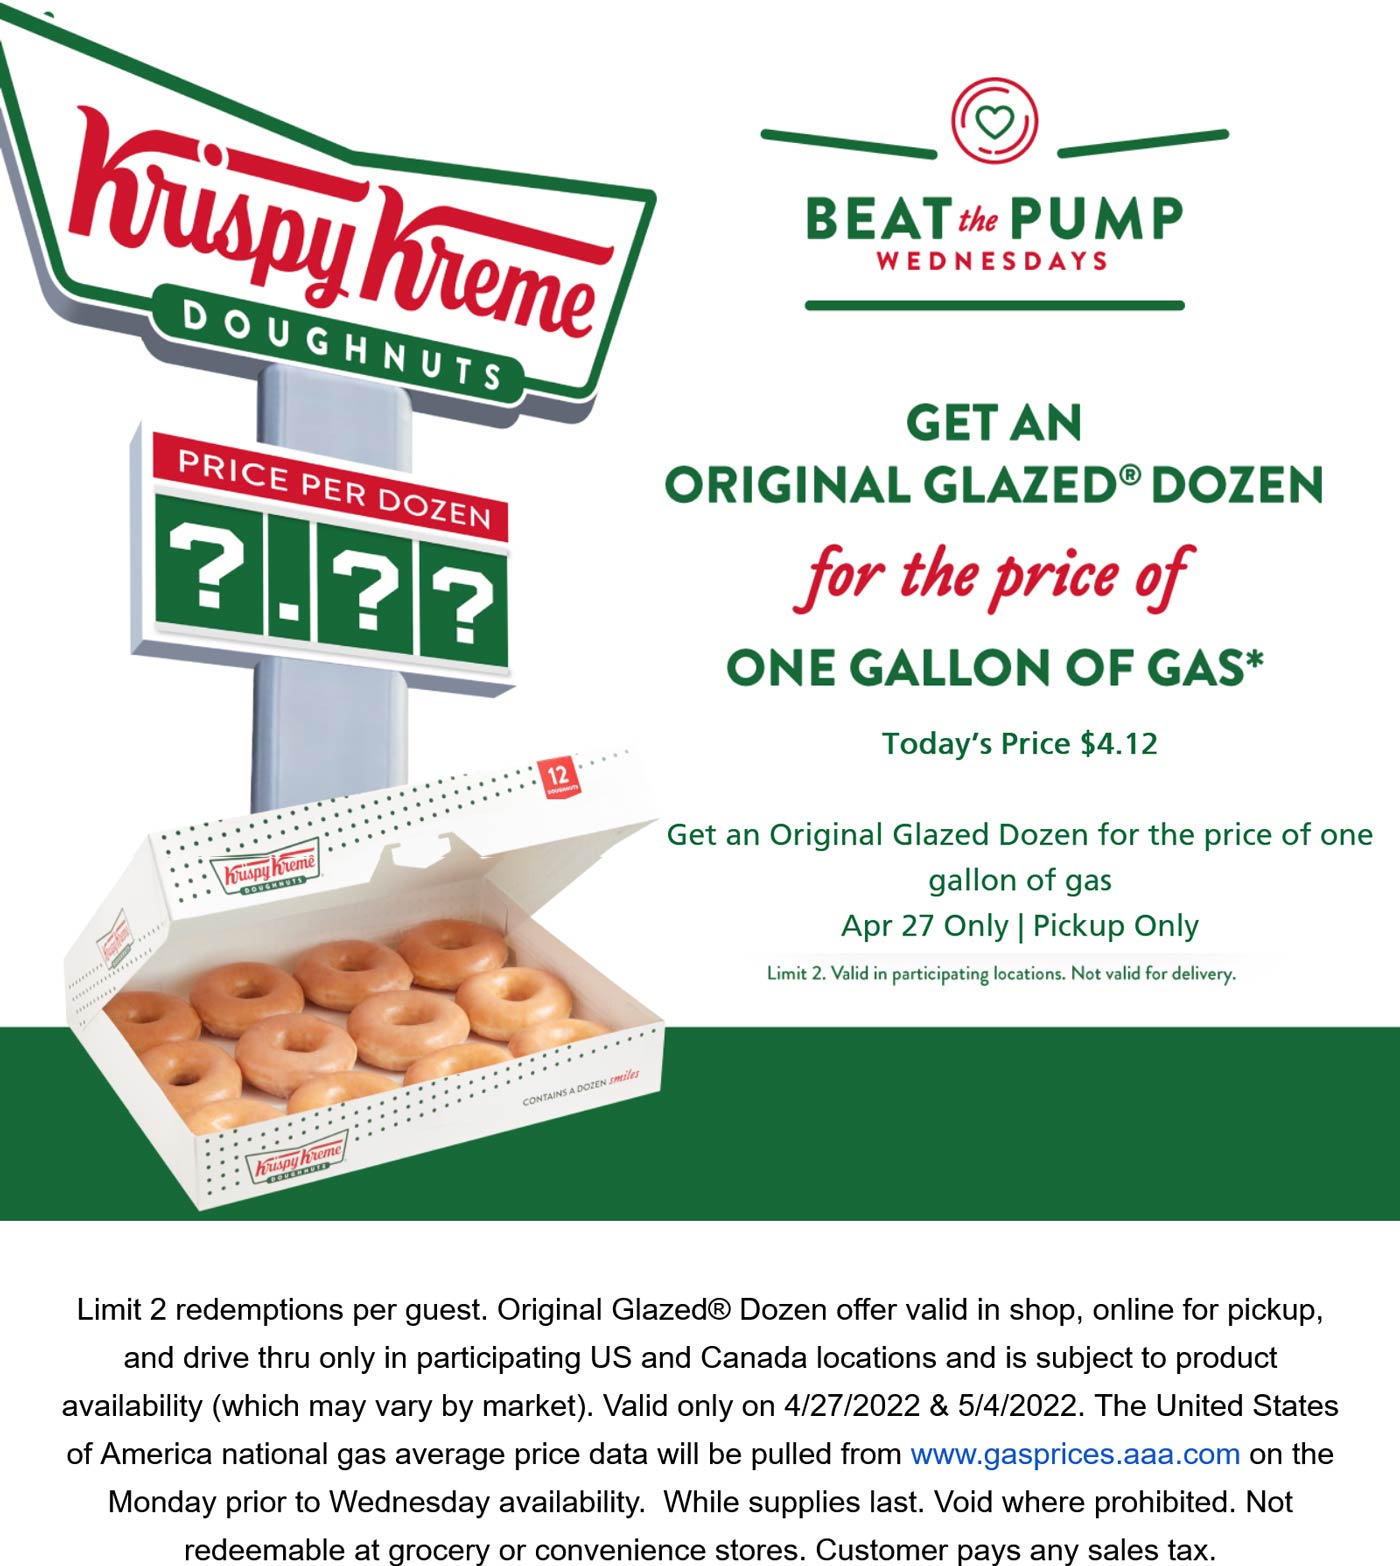 Krispy Kreme restaurants Coupon  $4.12 dozen glazed doughnuts today at Krispy Kreme #krispykreme 